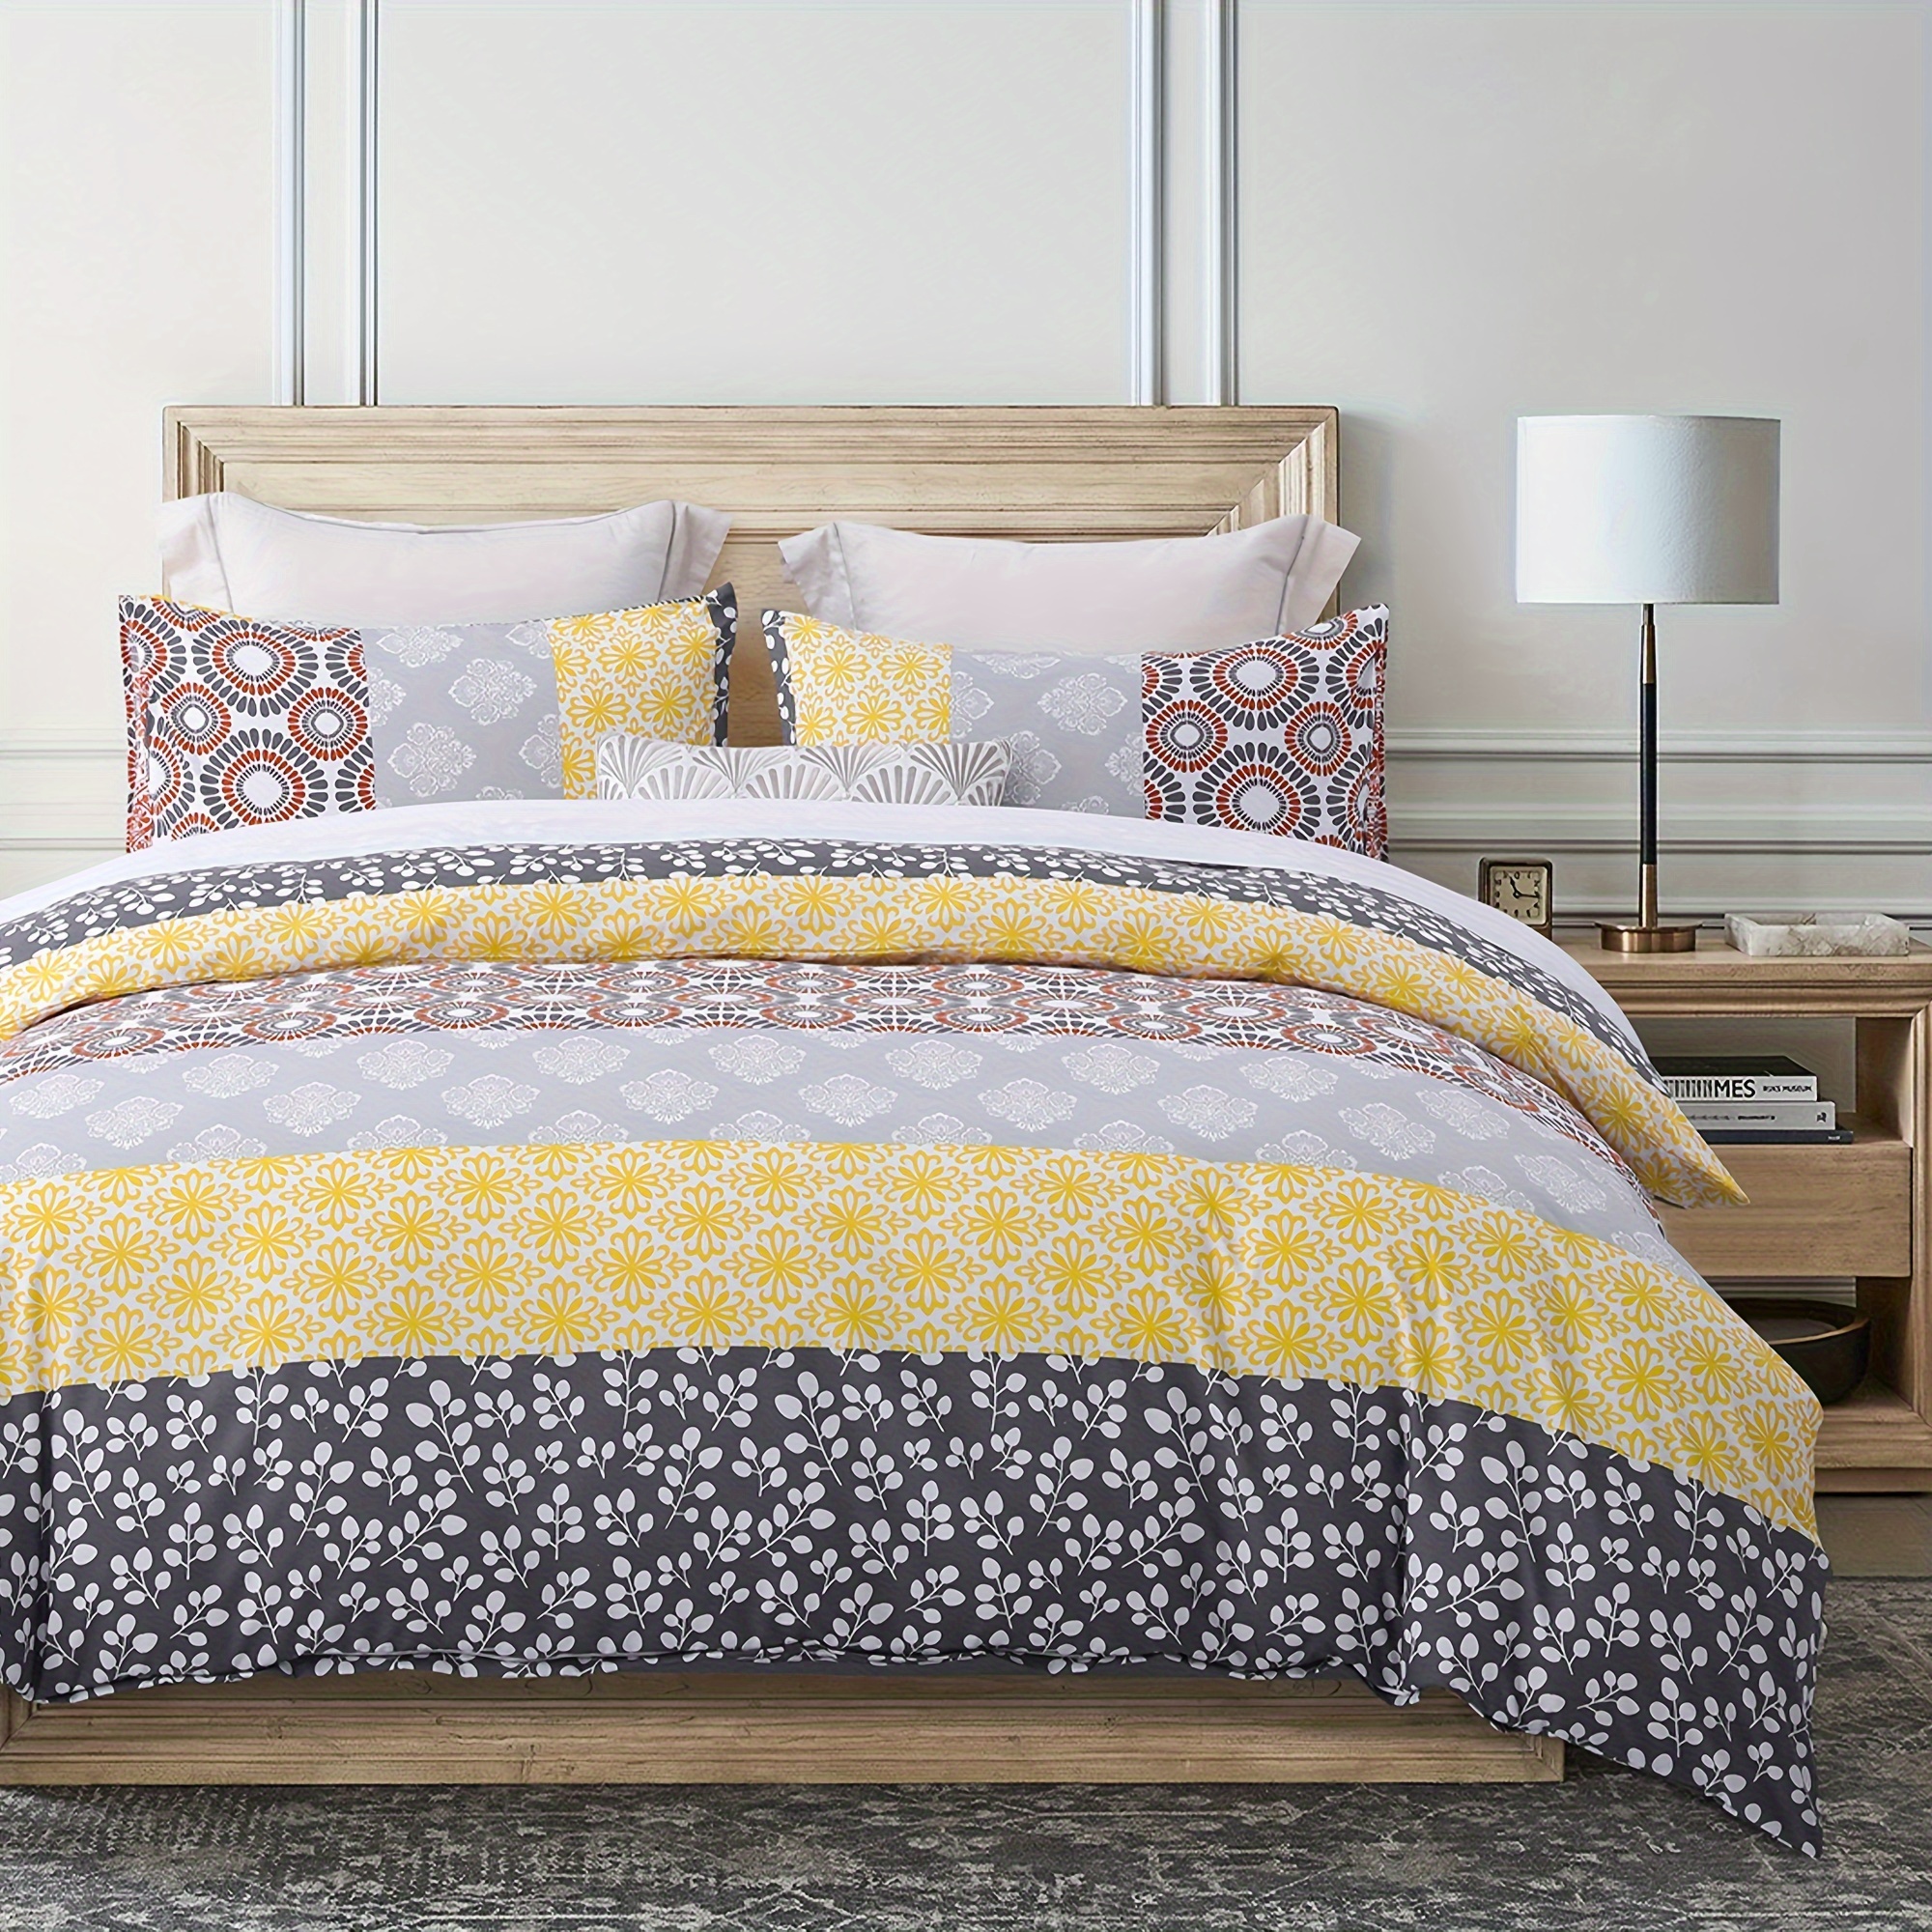 

Comforter Set, Soft Microfiber All Season Comforter, Colorful Boho Design With Yellow Bohemian Striped Pattern, Down Alternative Machine Washable